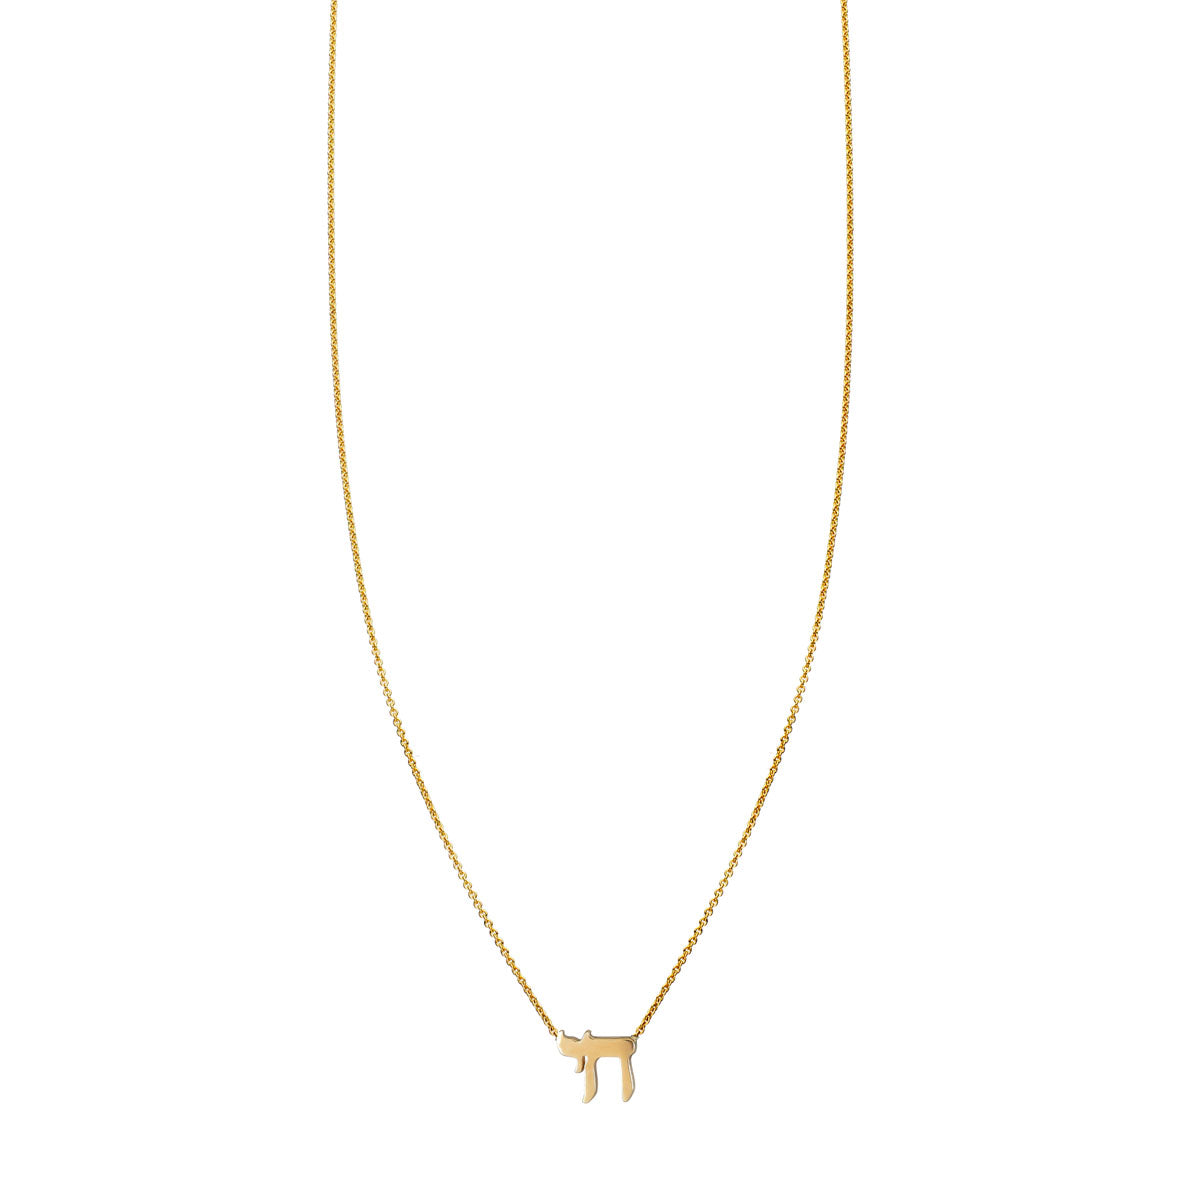 gold chai necklace prn 269 14k